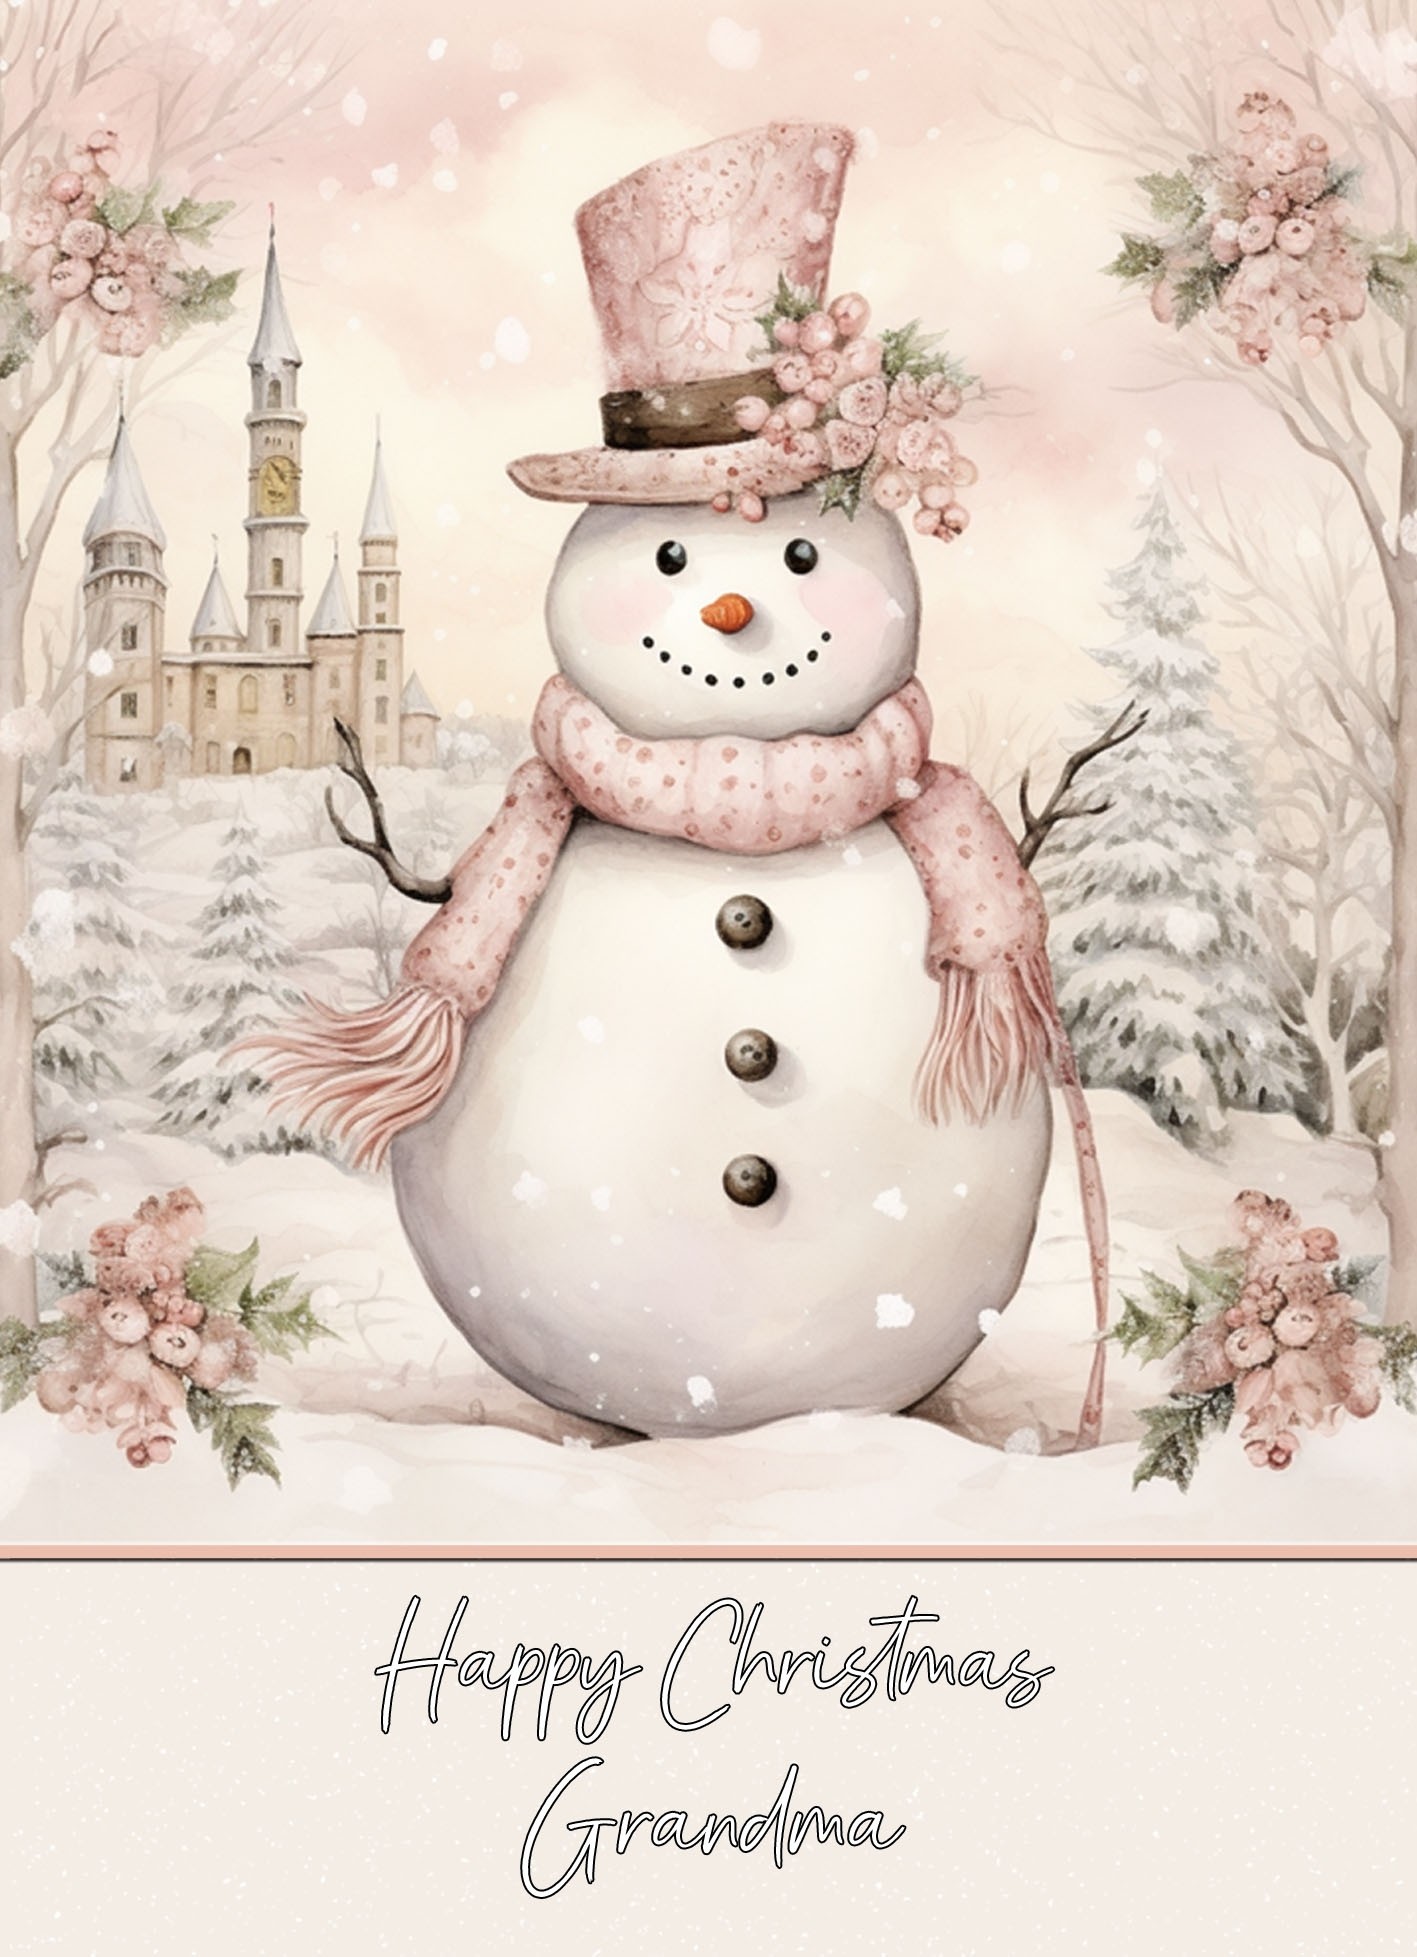 Snowman Art Christmas Card For Grandma (Design 2)